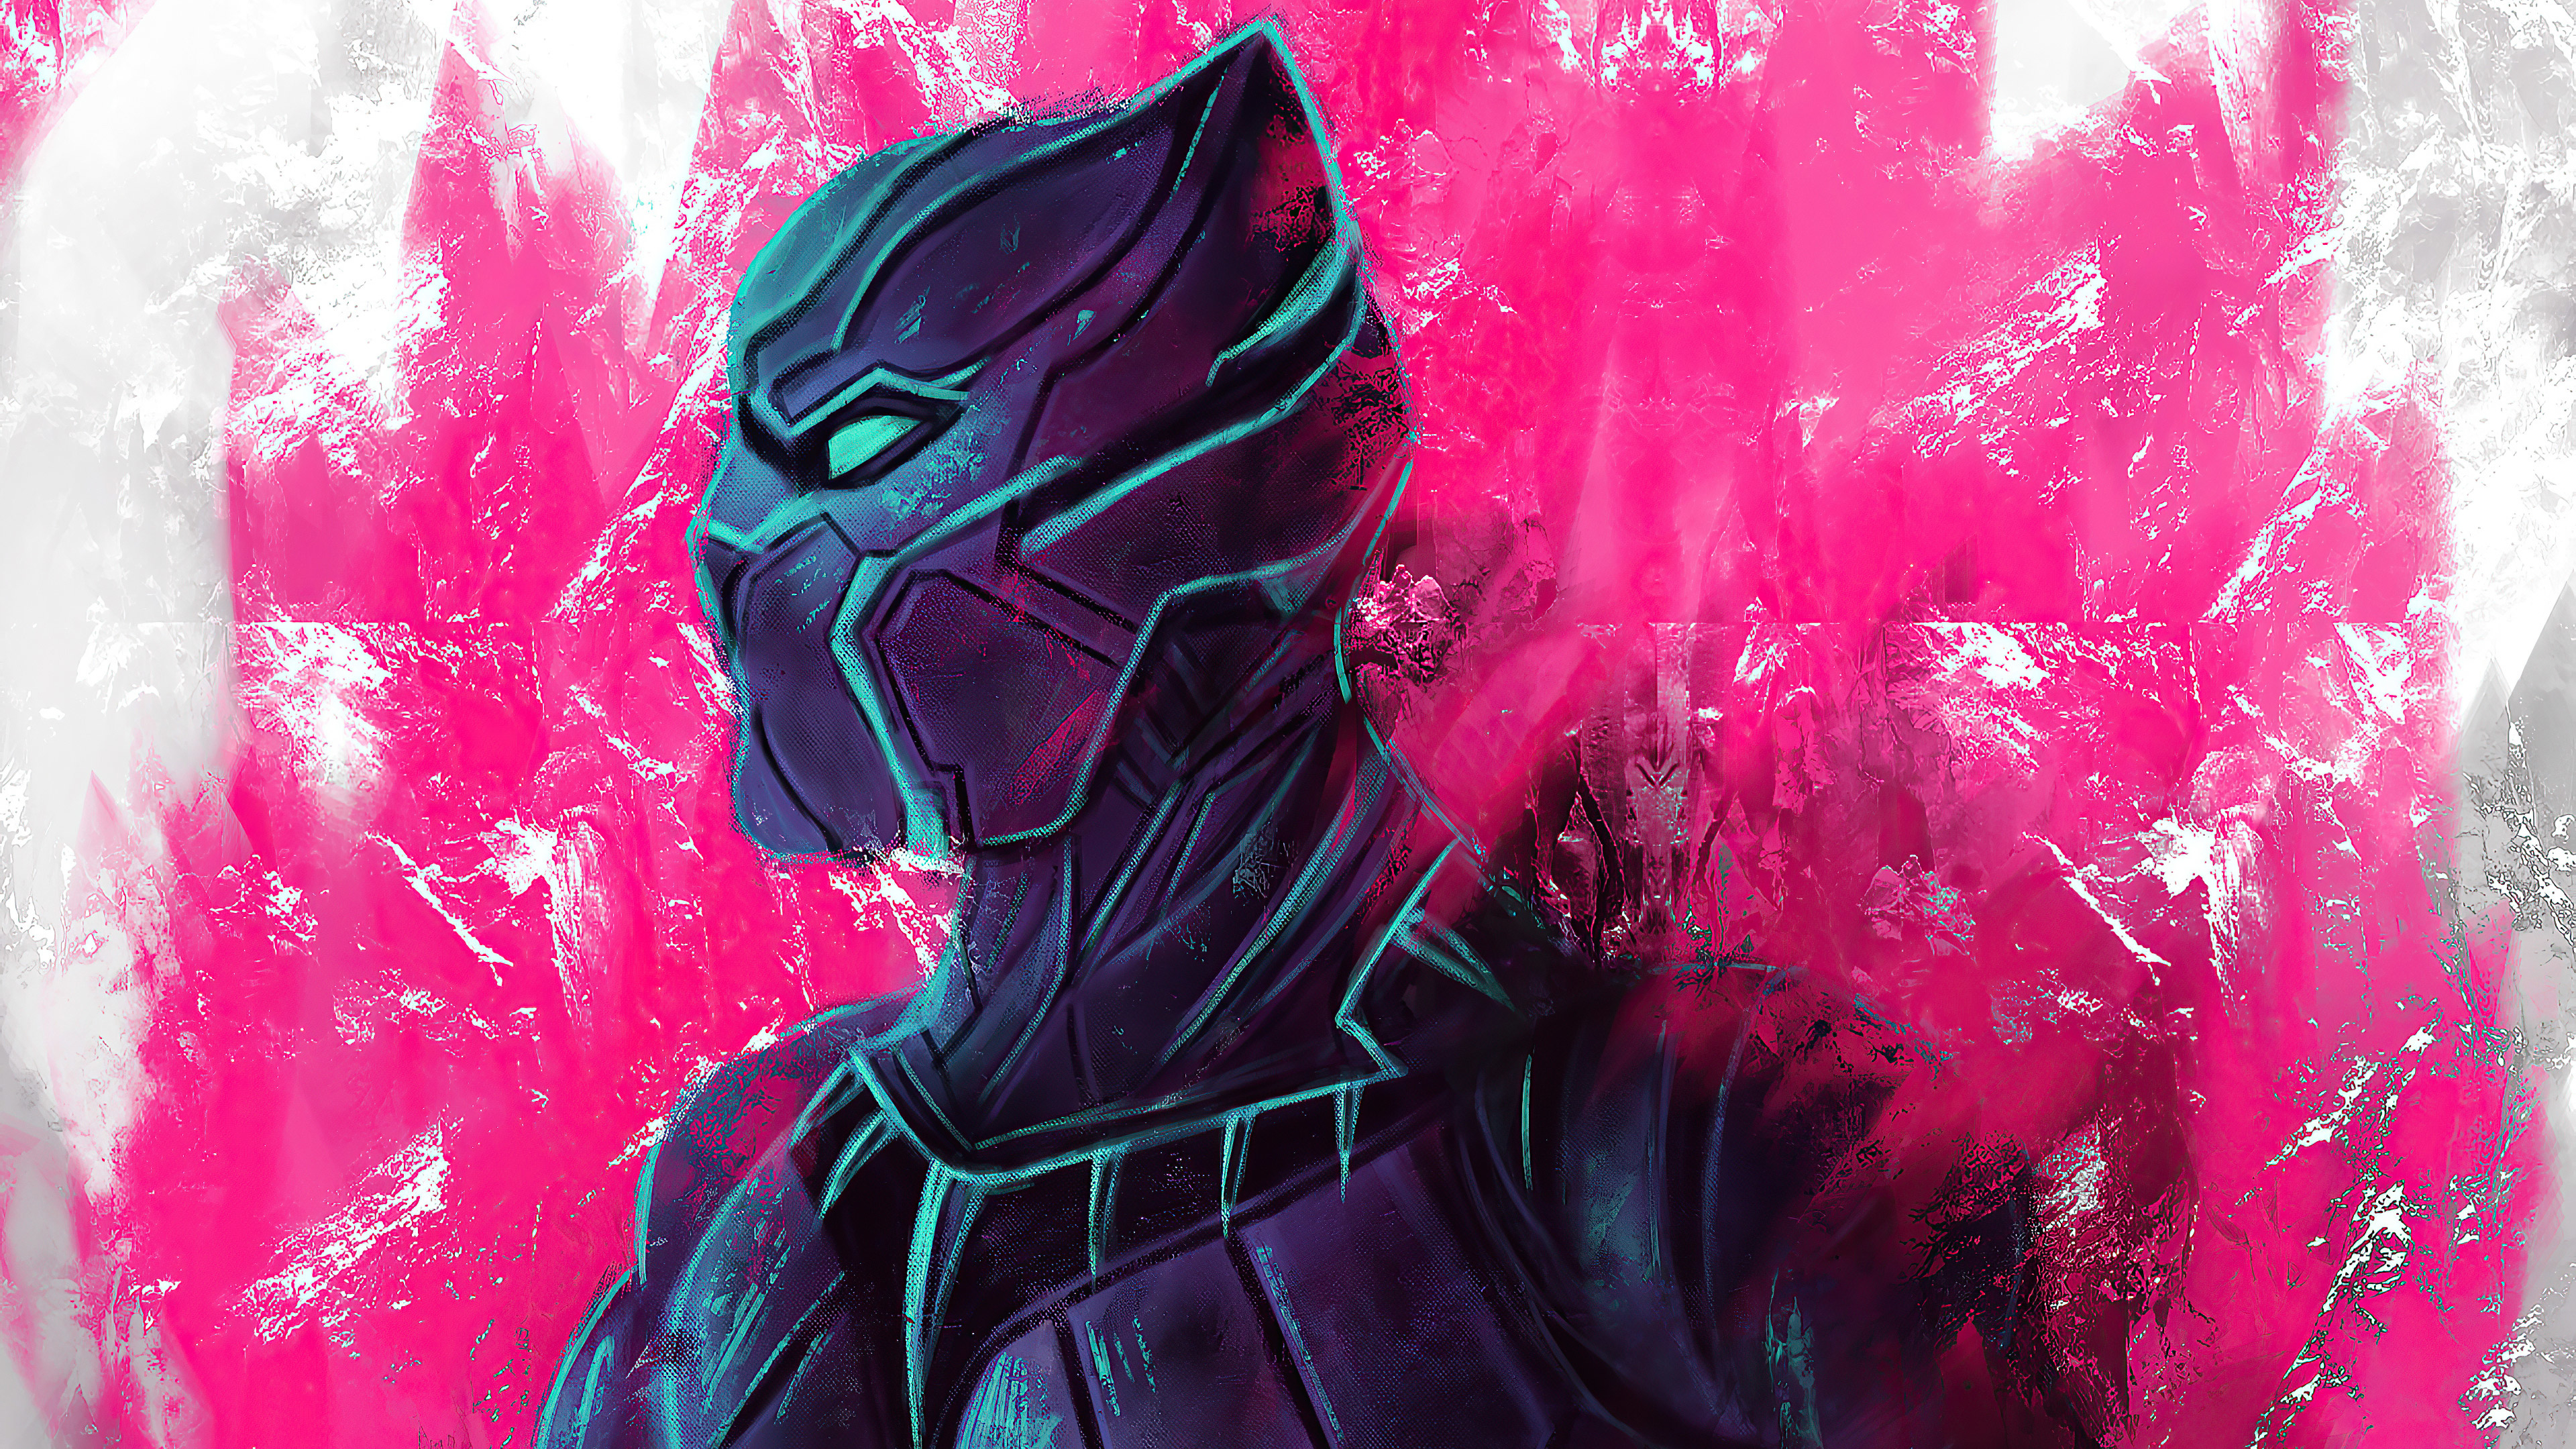 Black Panther Marvel Comic Wallpaper, HD Superheroes 4K ...